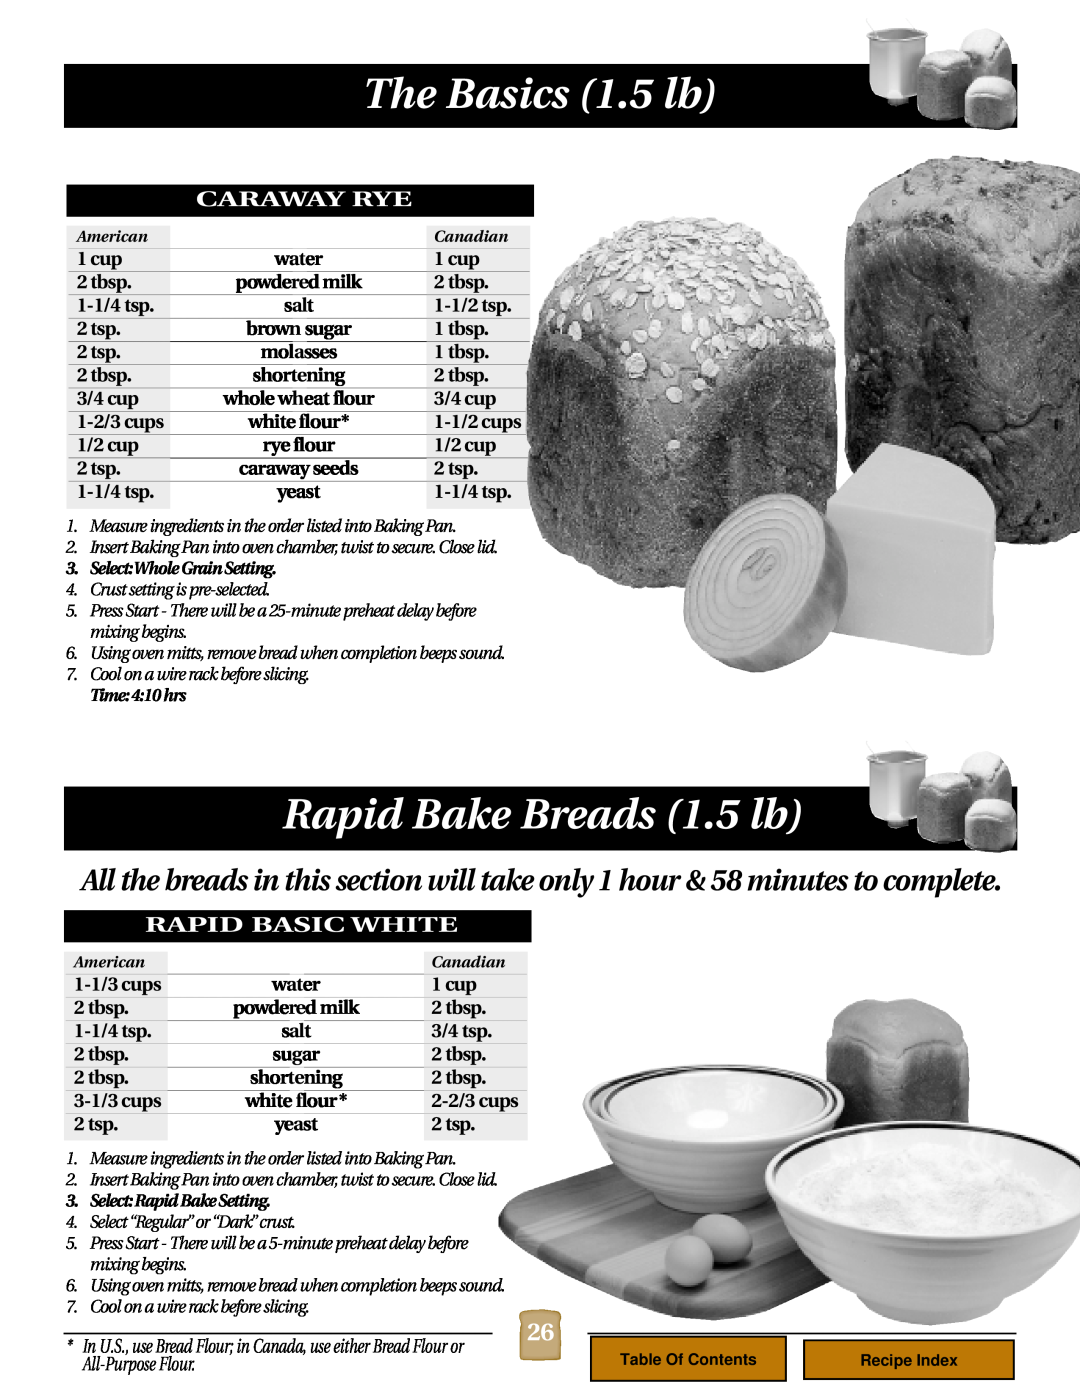 Black & Decker B1620 manual Rapid Bake Breads 1.5 lb, The Basics 1.5 lb, Caraway Rye, Rapid Basic White 